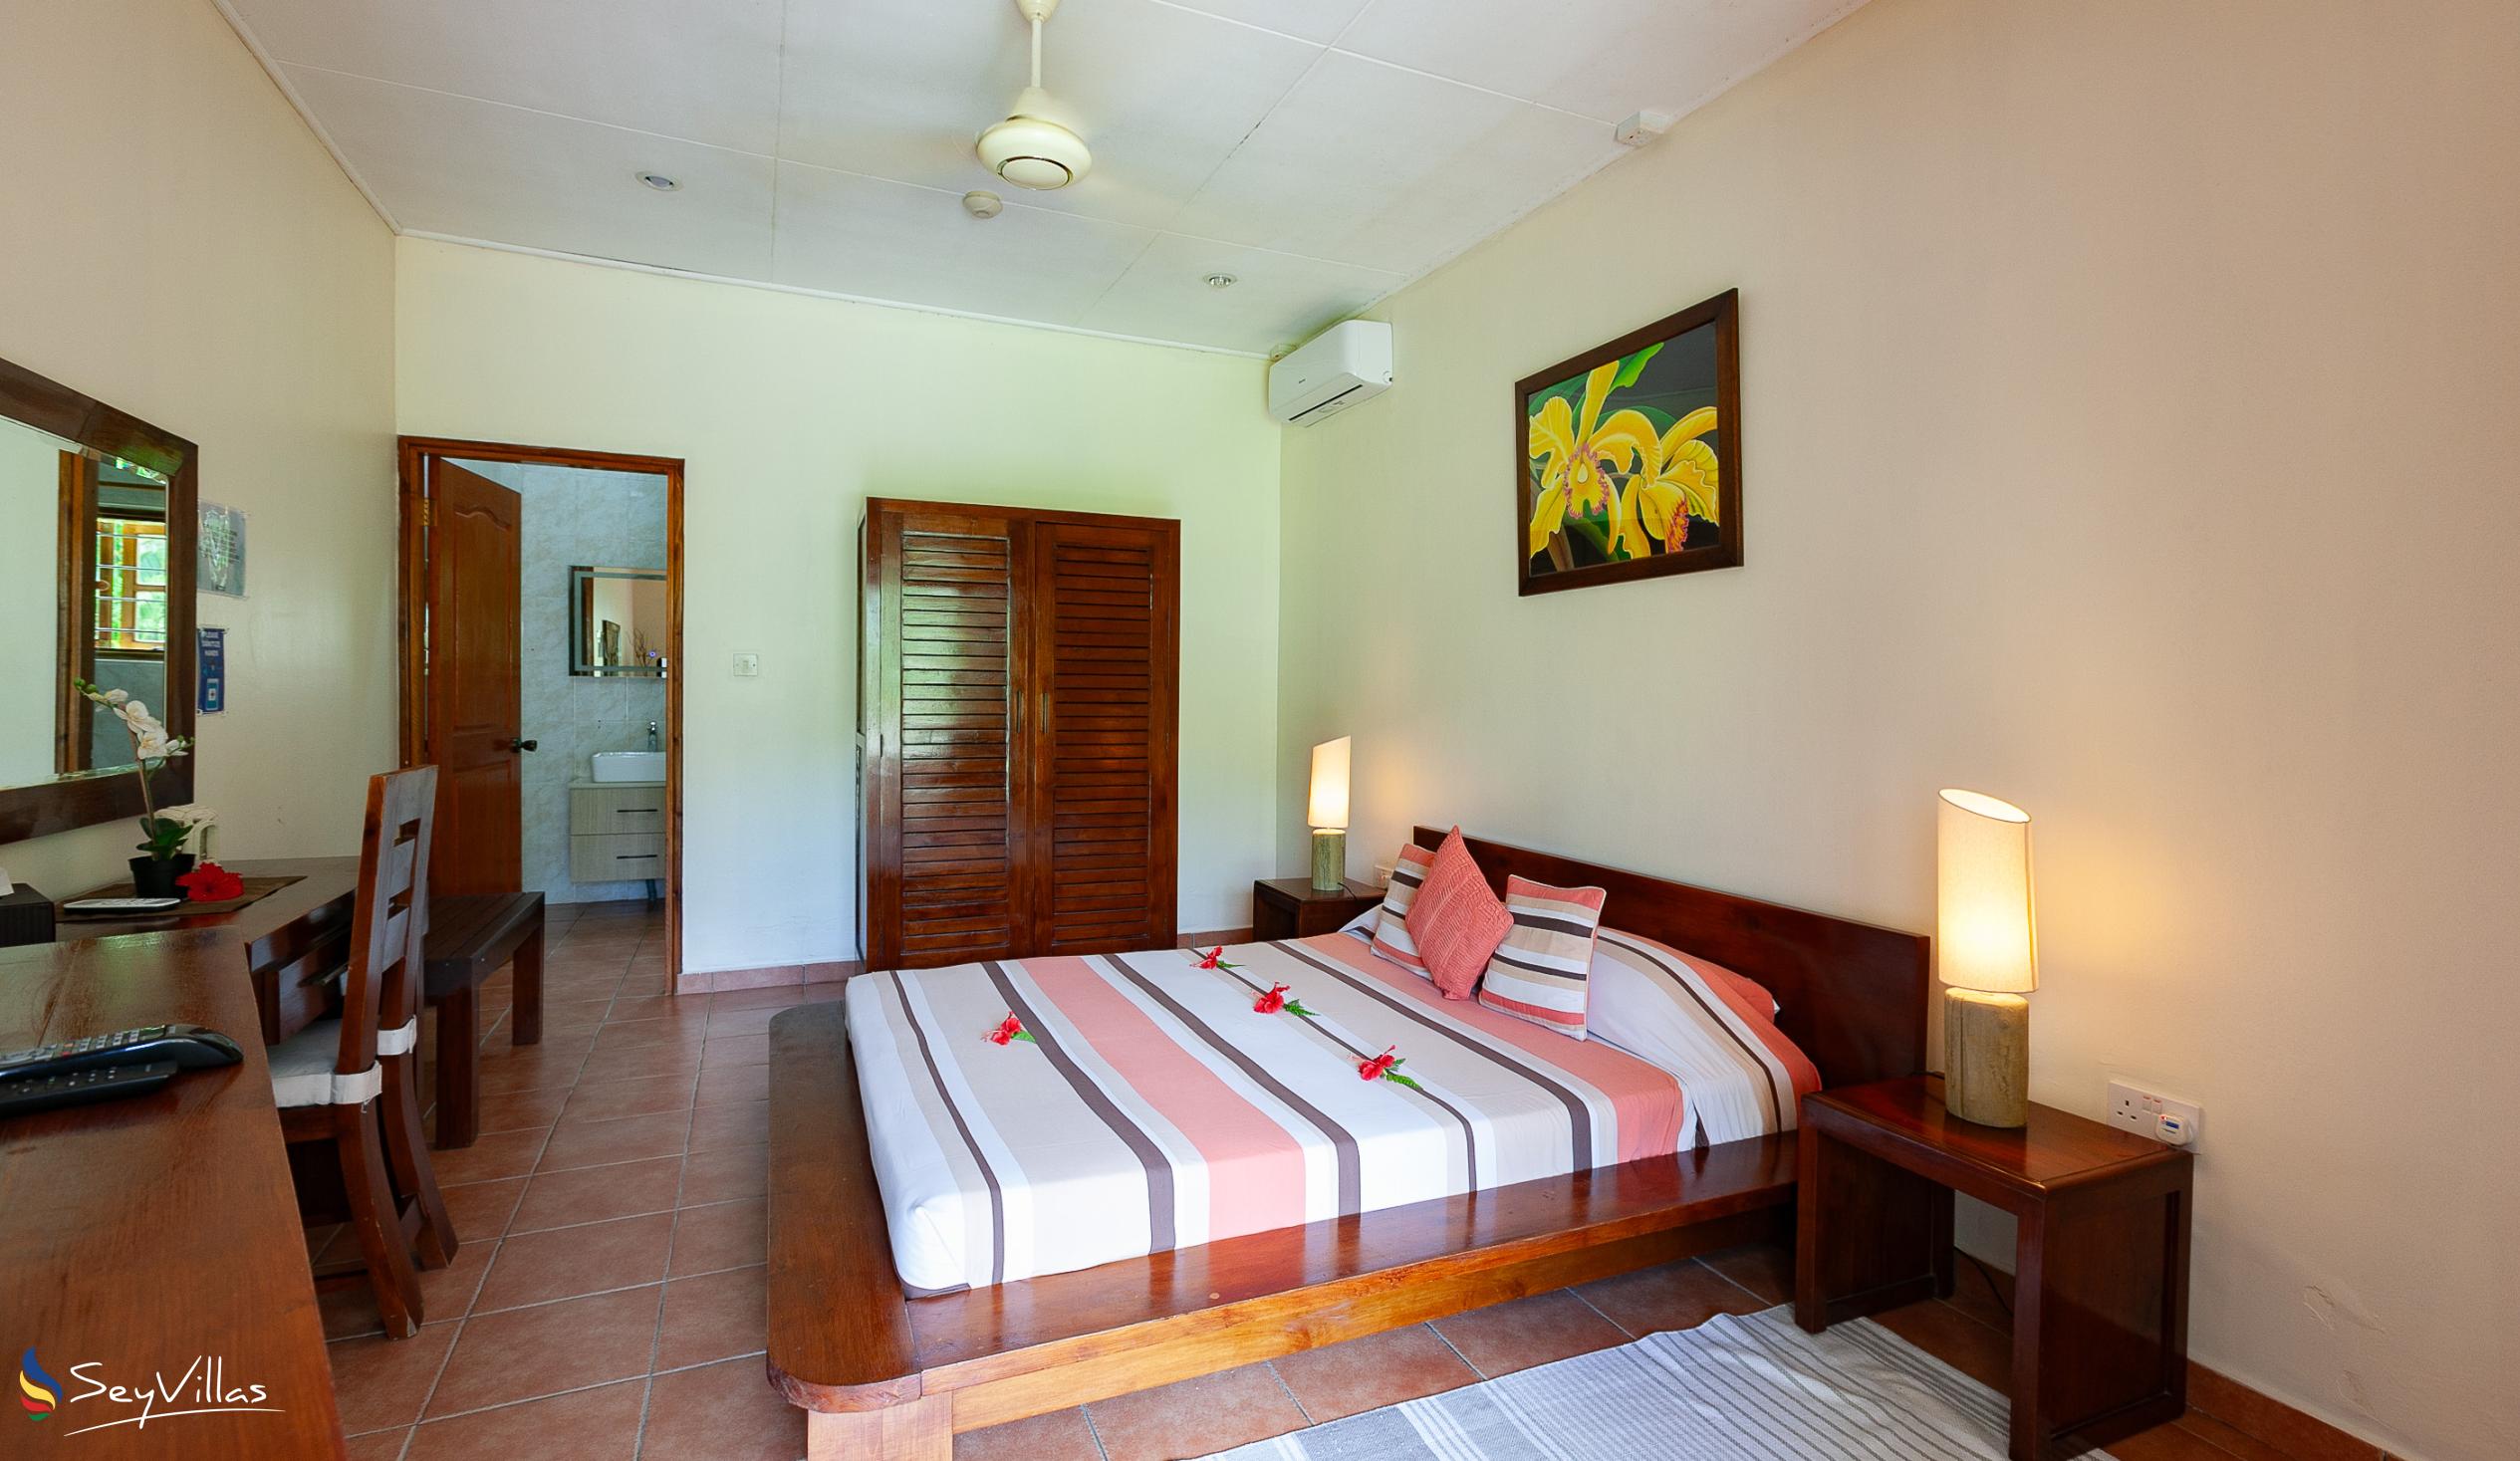 Photo 33: Britannia Hotel - Superior Room - Praslin (Seychelles)